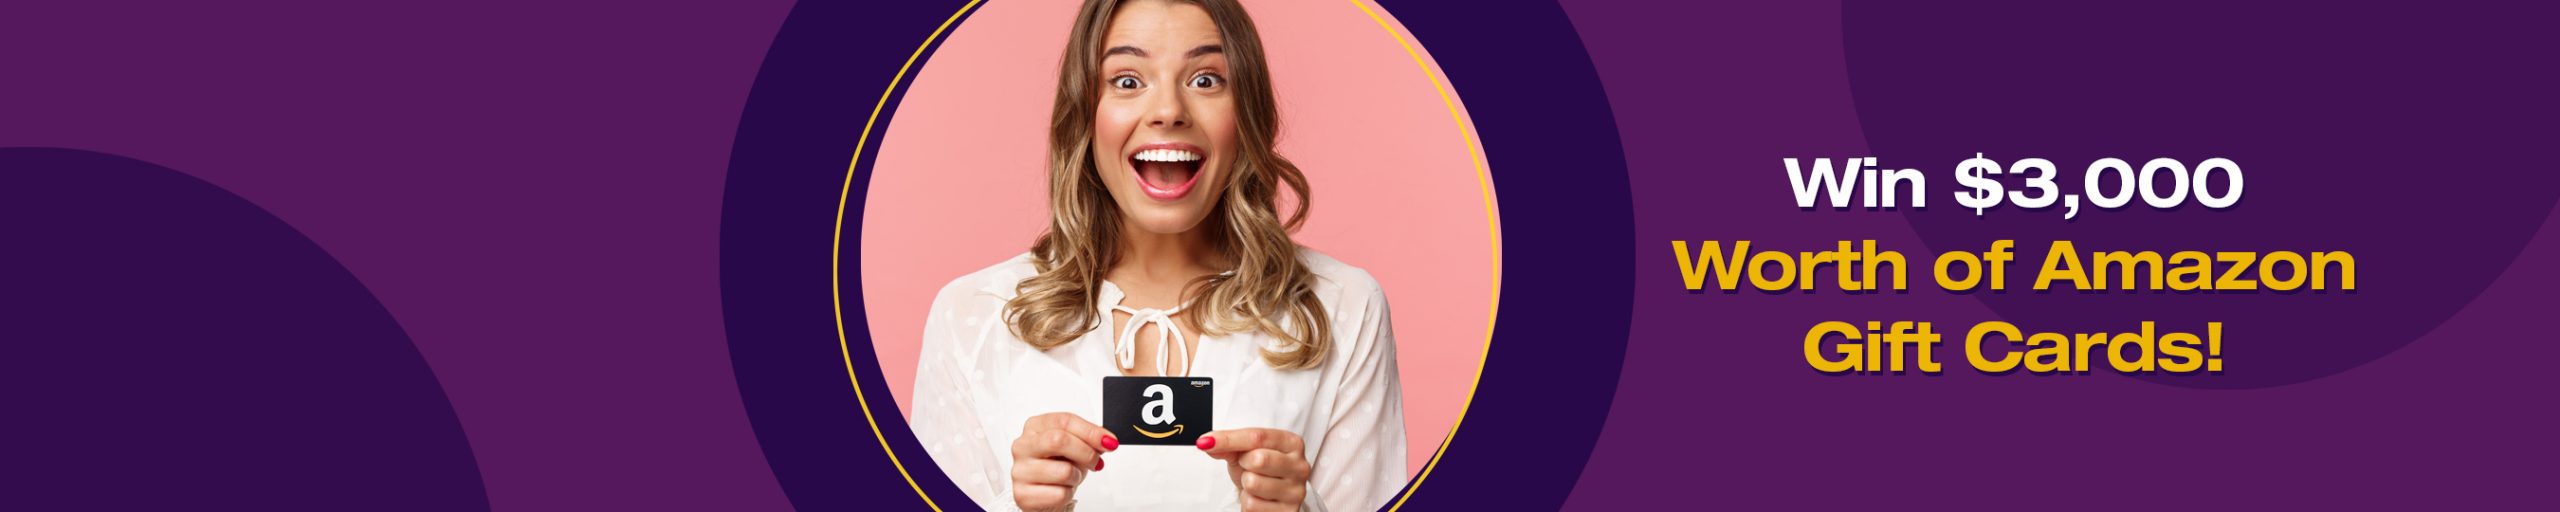 Win Amazon Gift Cards